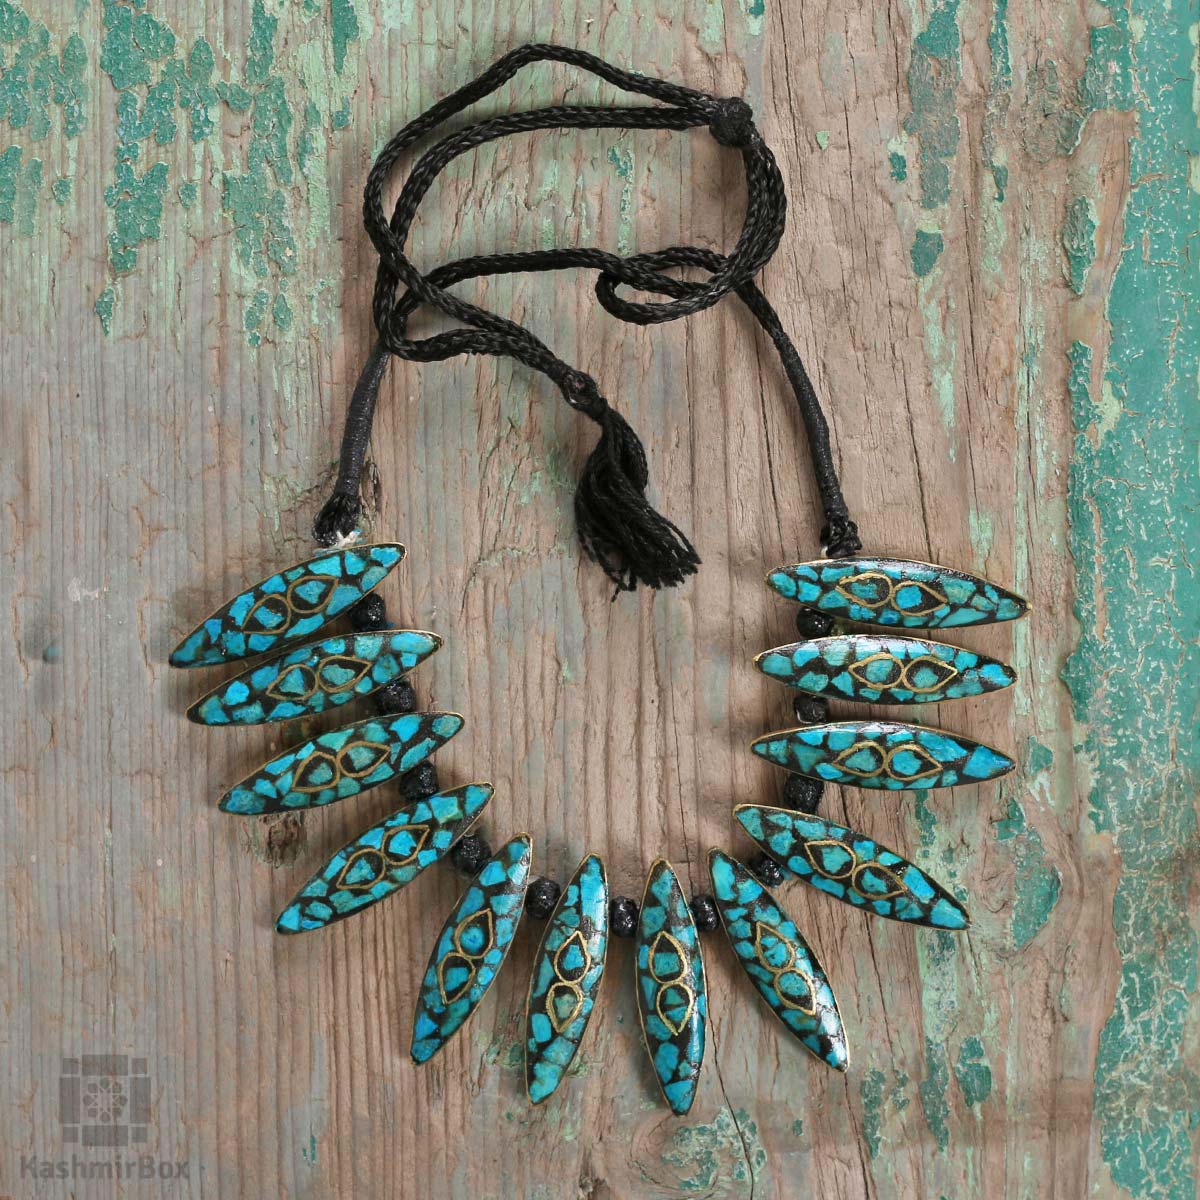 Leaved Turquoise Handmade Necklace Set - KashmirBox.com